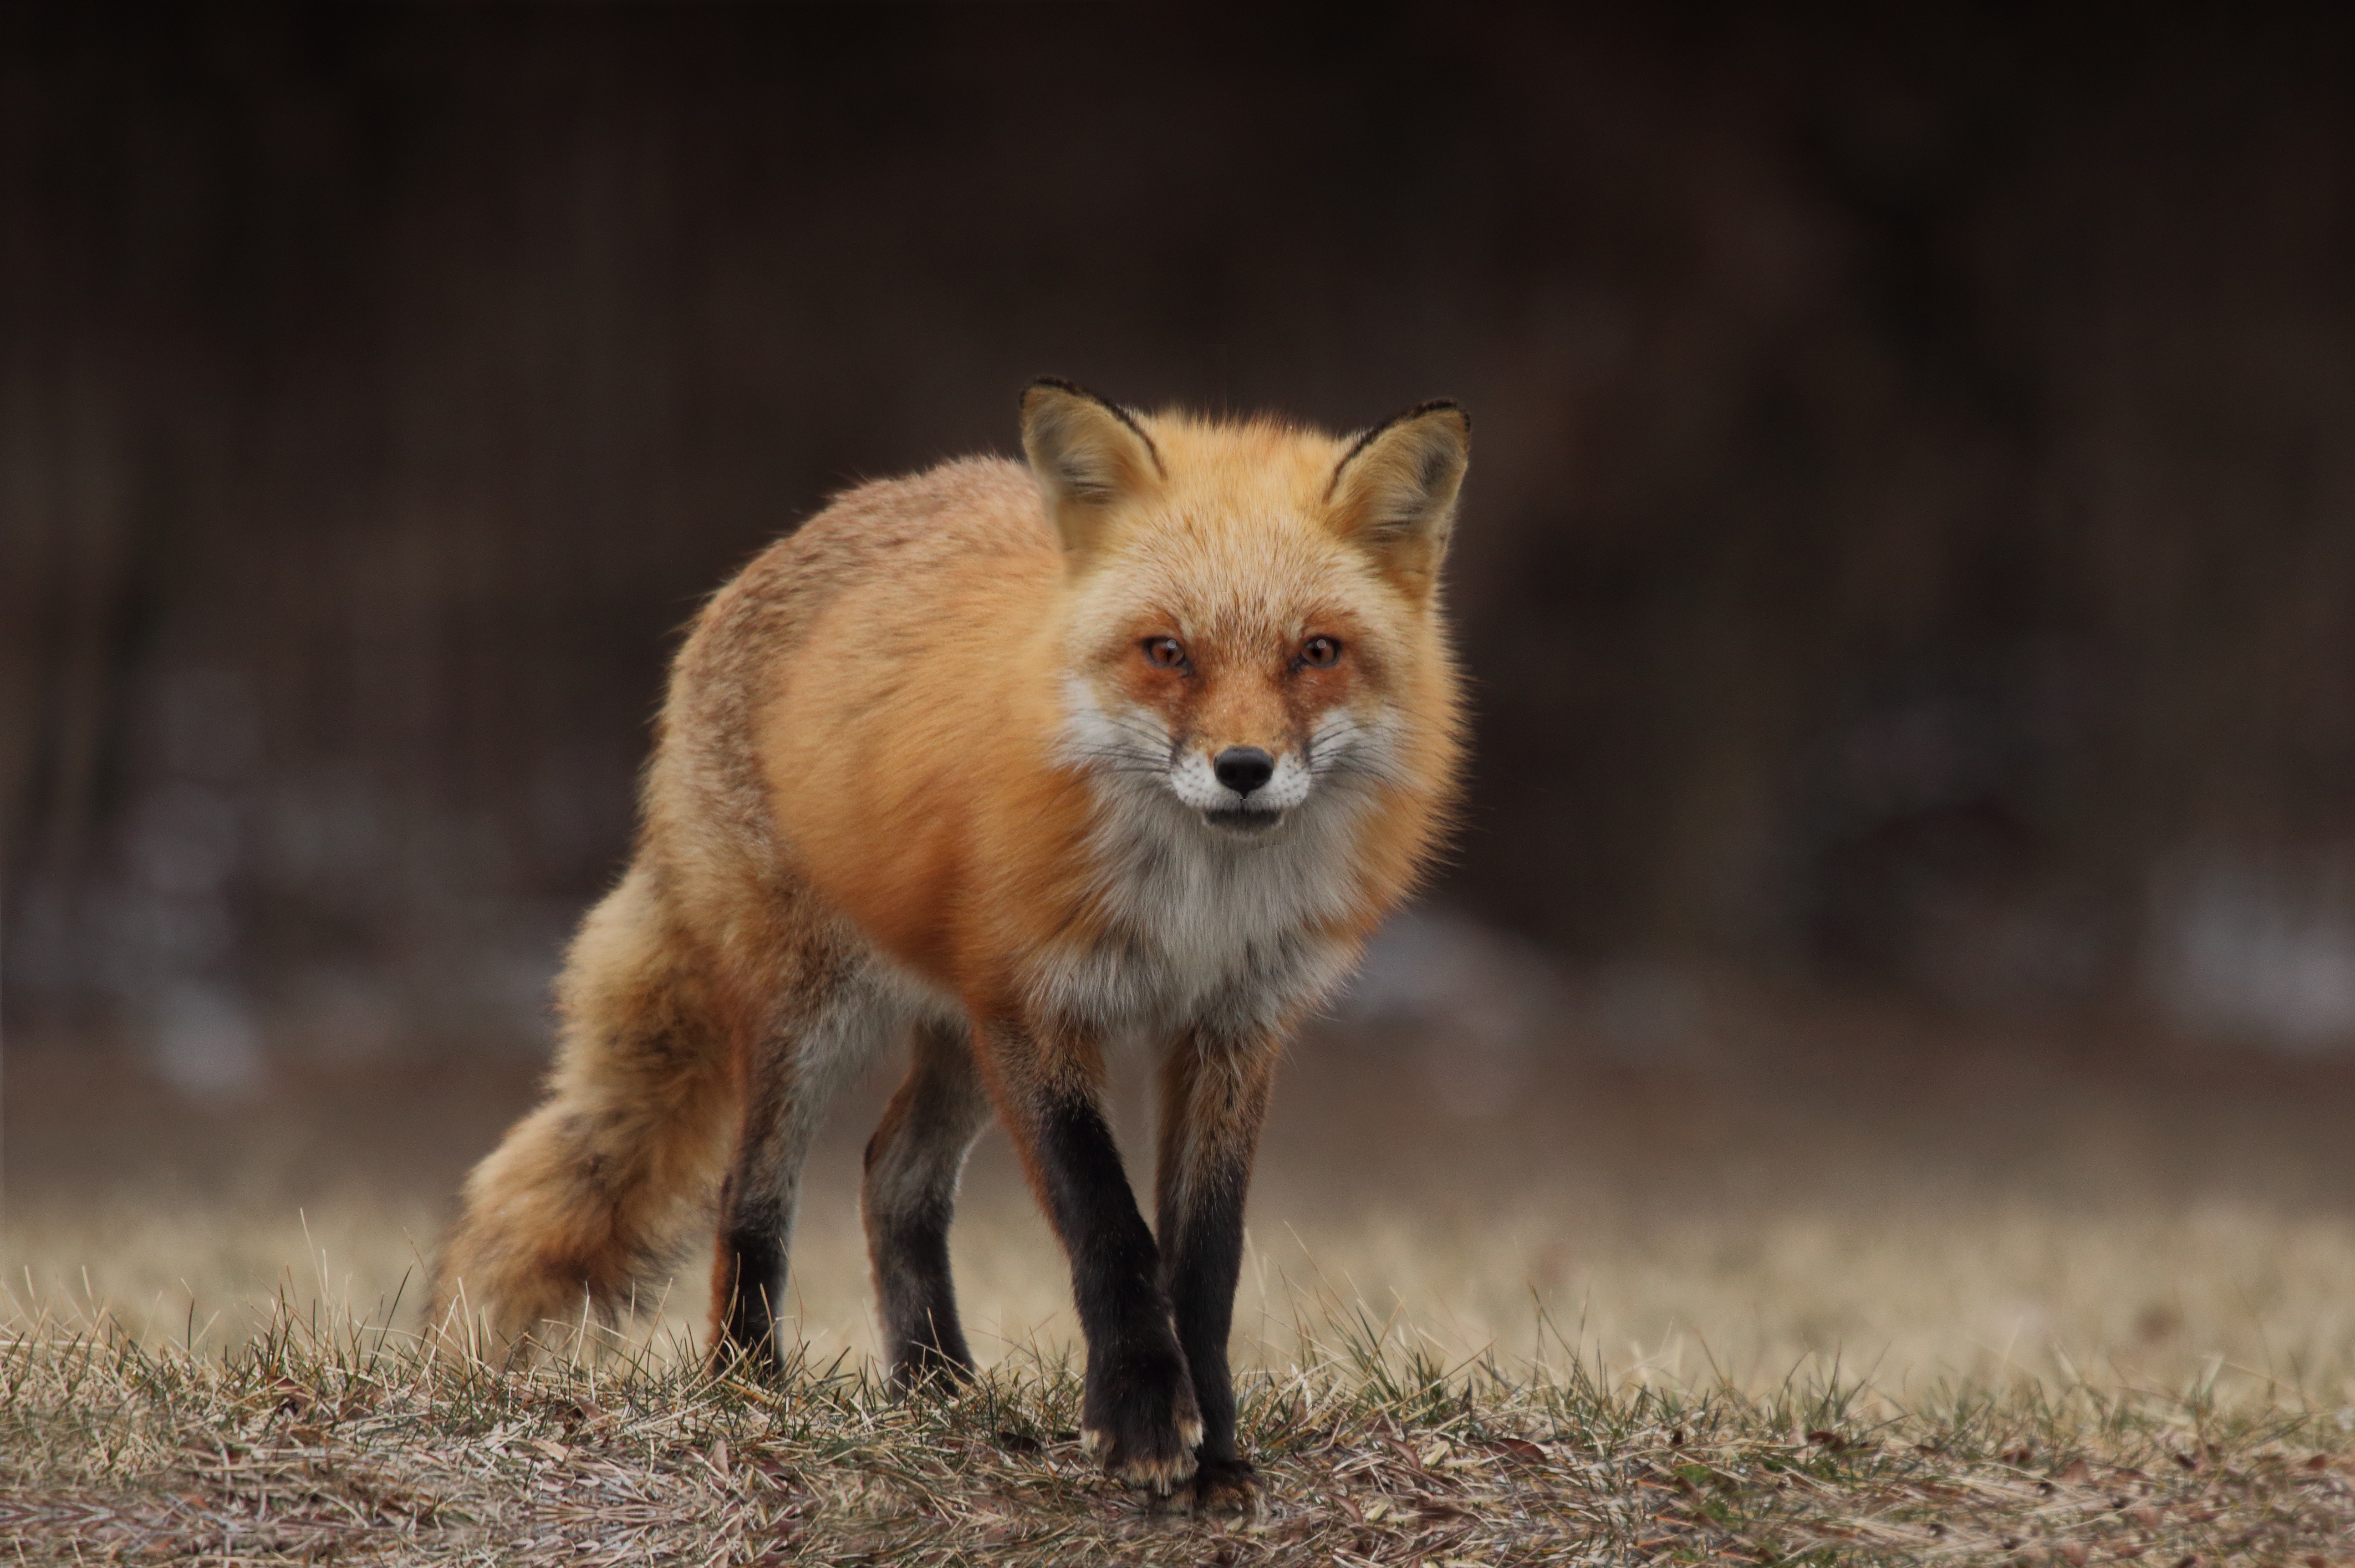 fox on grass field during daytime